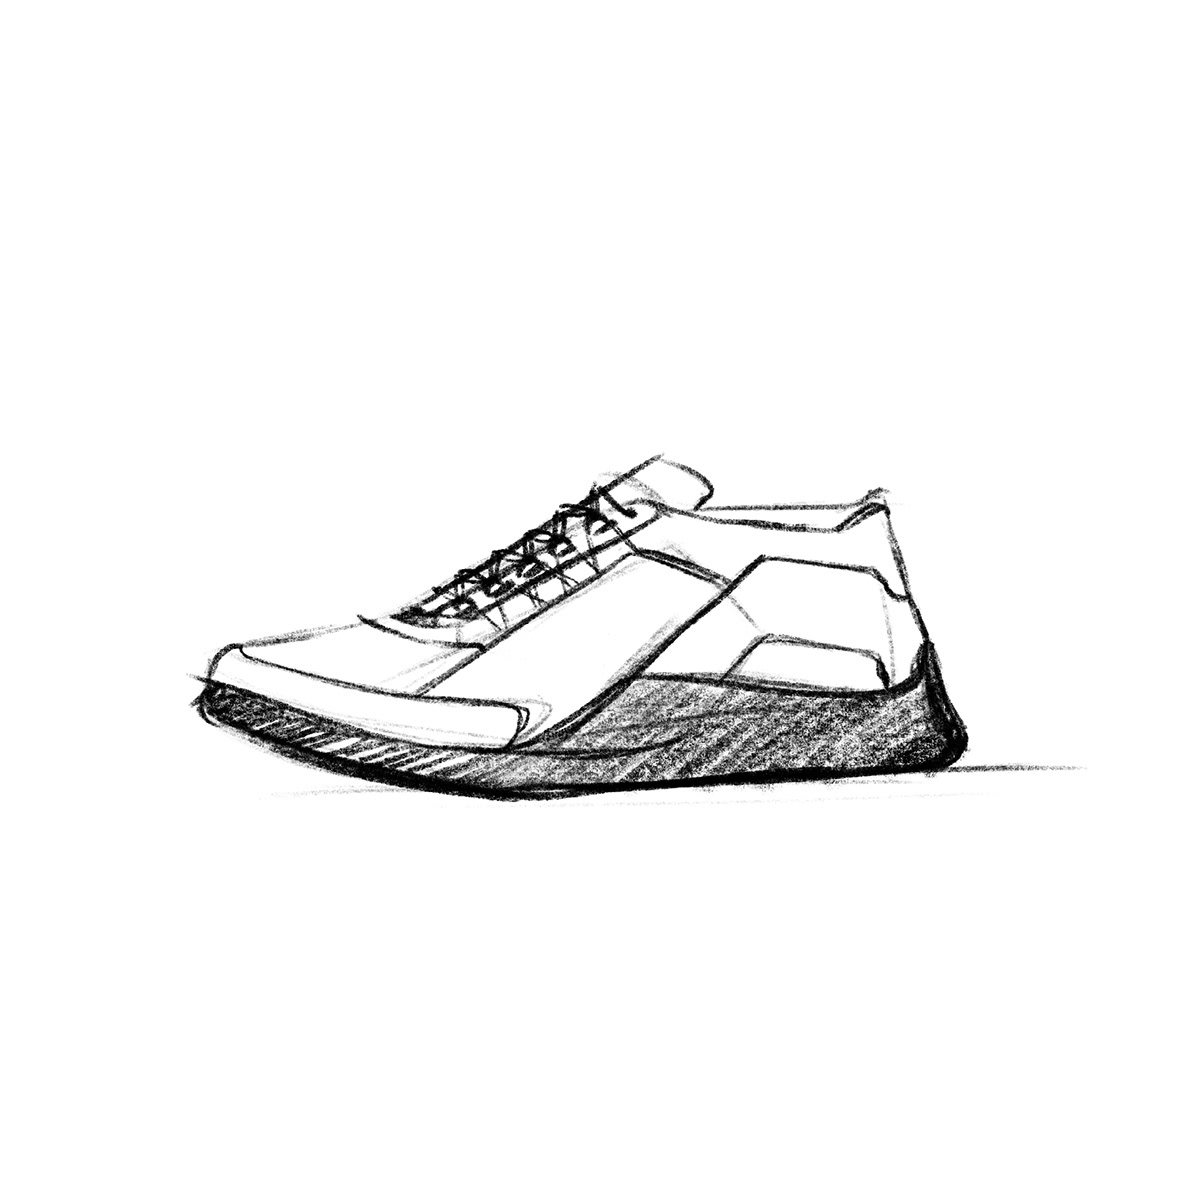 sketching design industrial design  footwear Fashion 